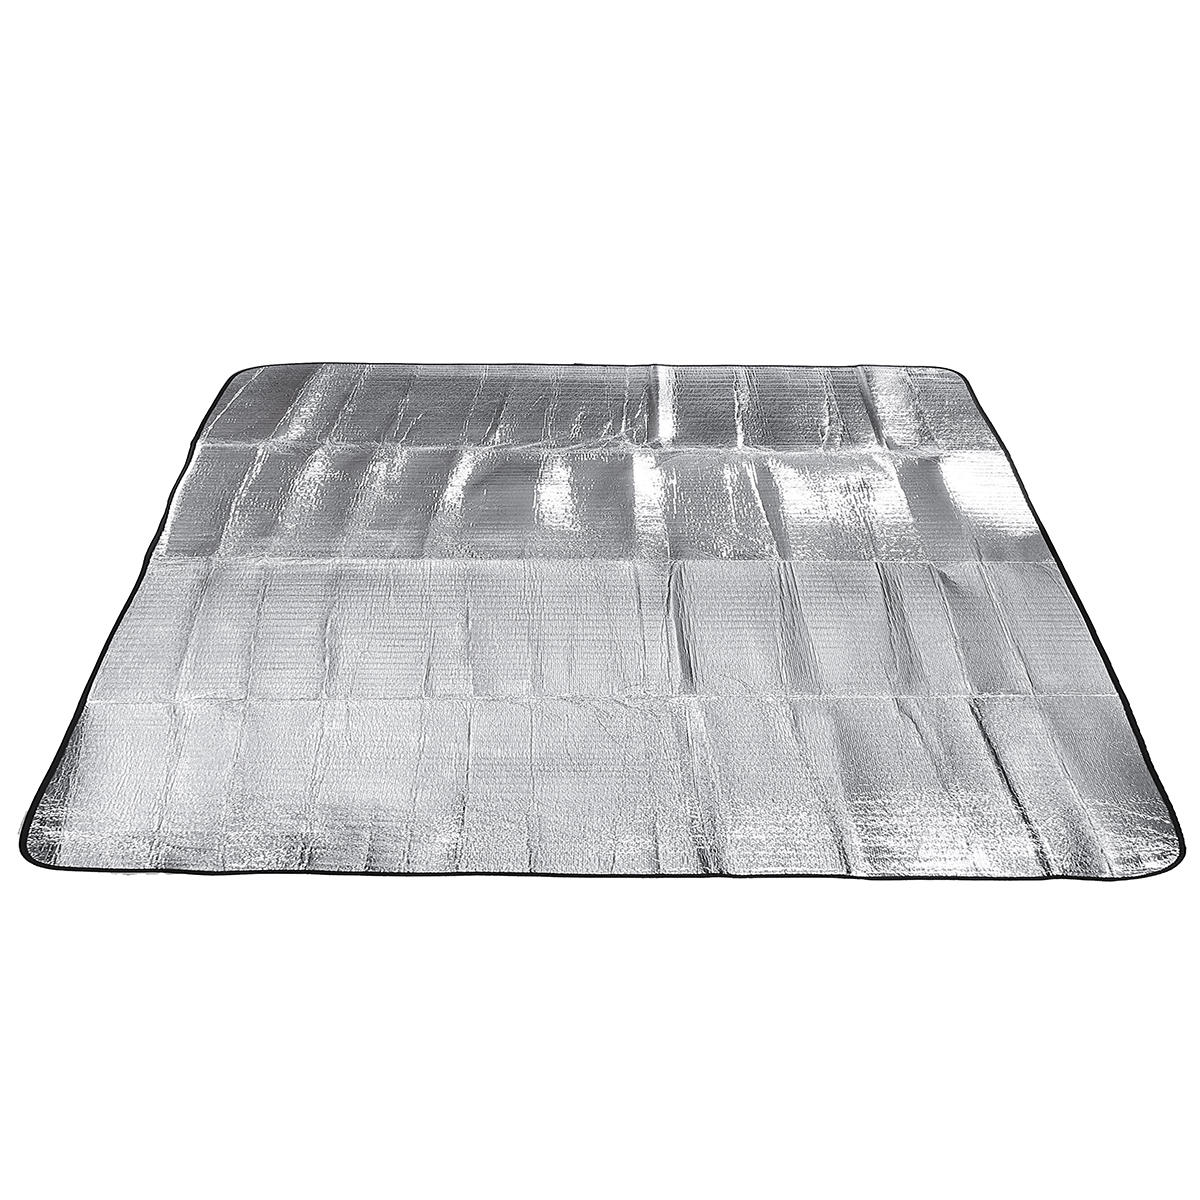 200x200CM Aluminium Foil Sleeping Pad Χαλί πικ-νικ για υπαίθρια κάμπινγκ